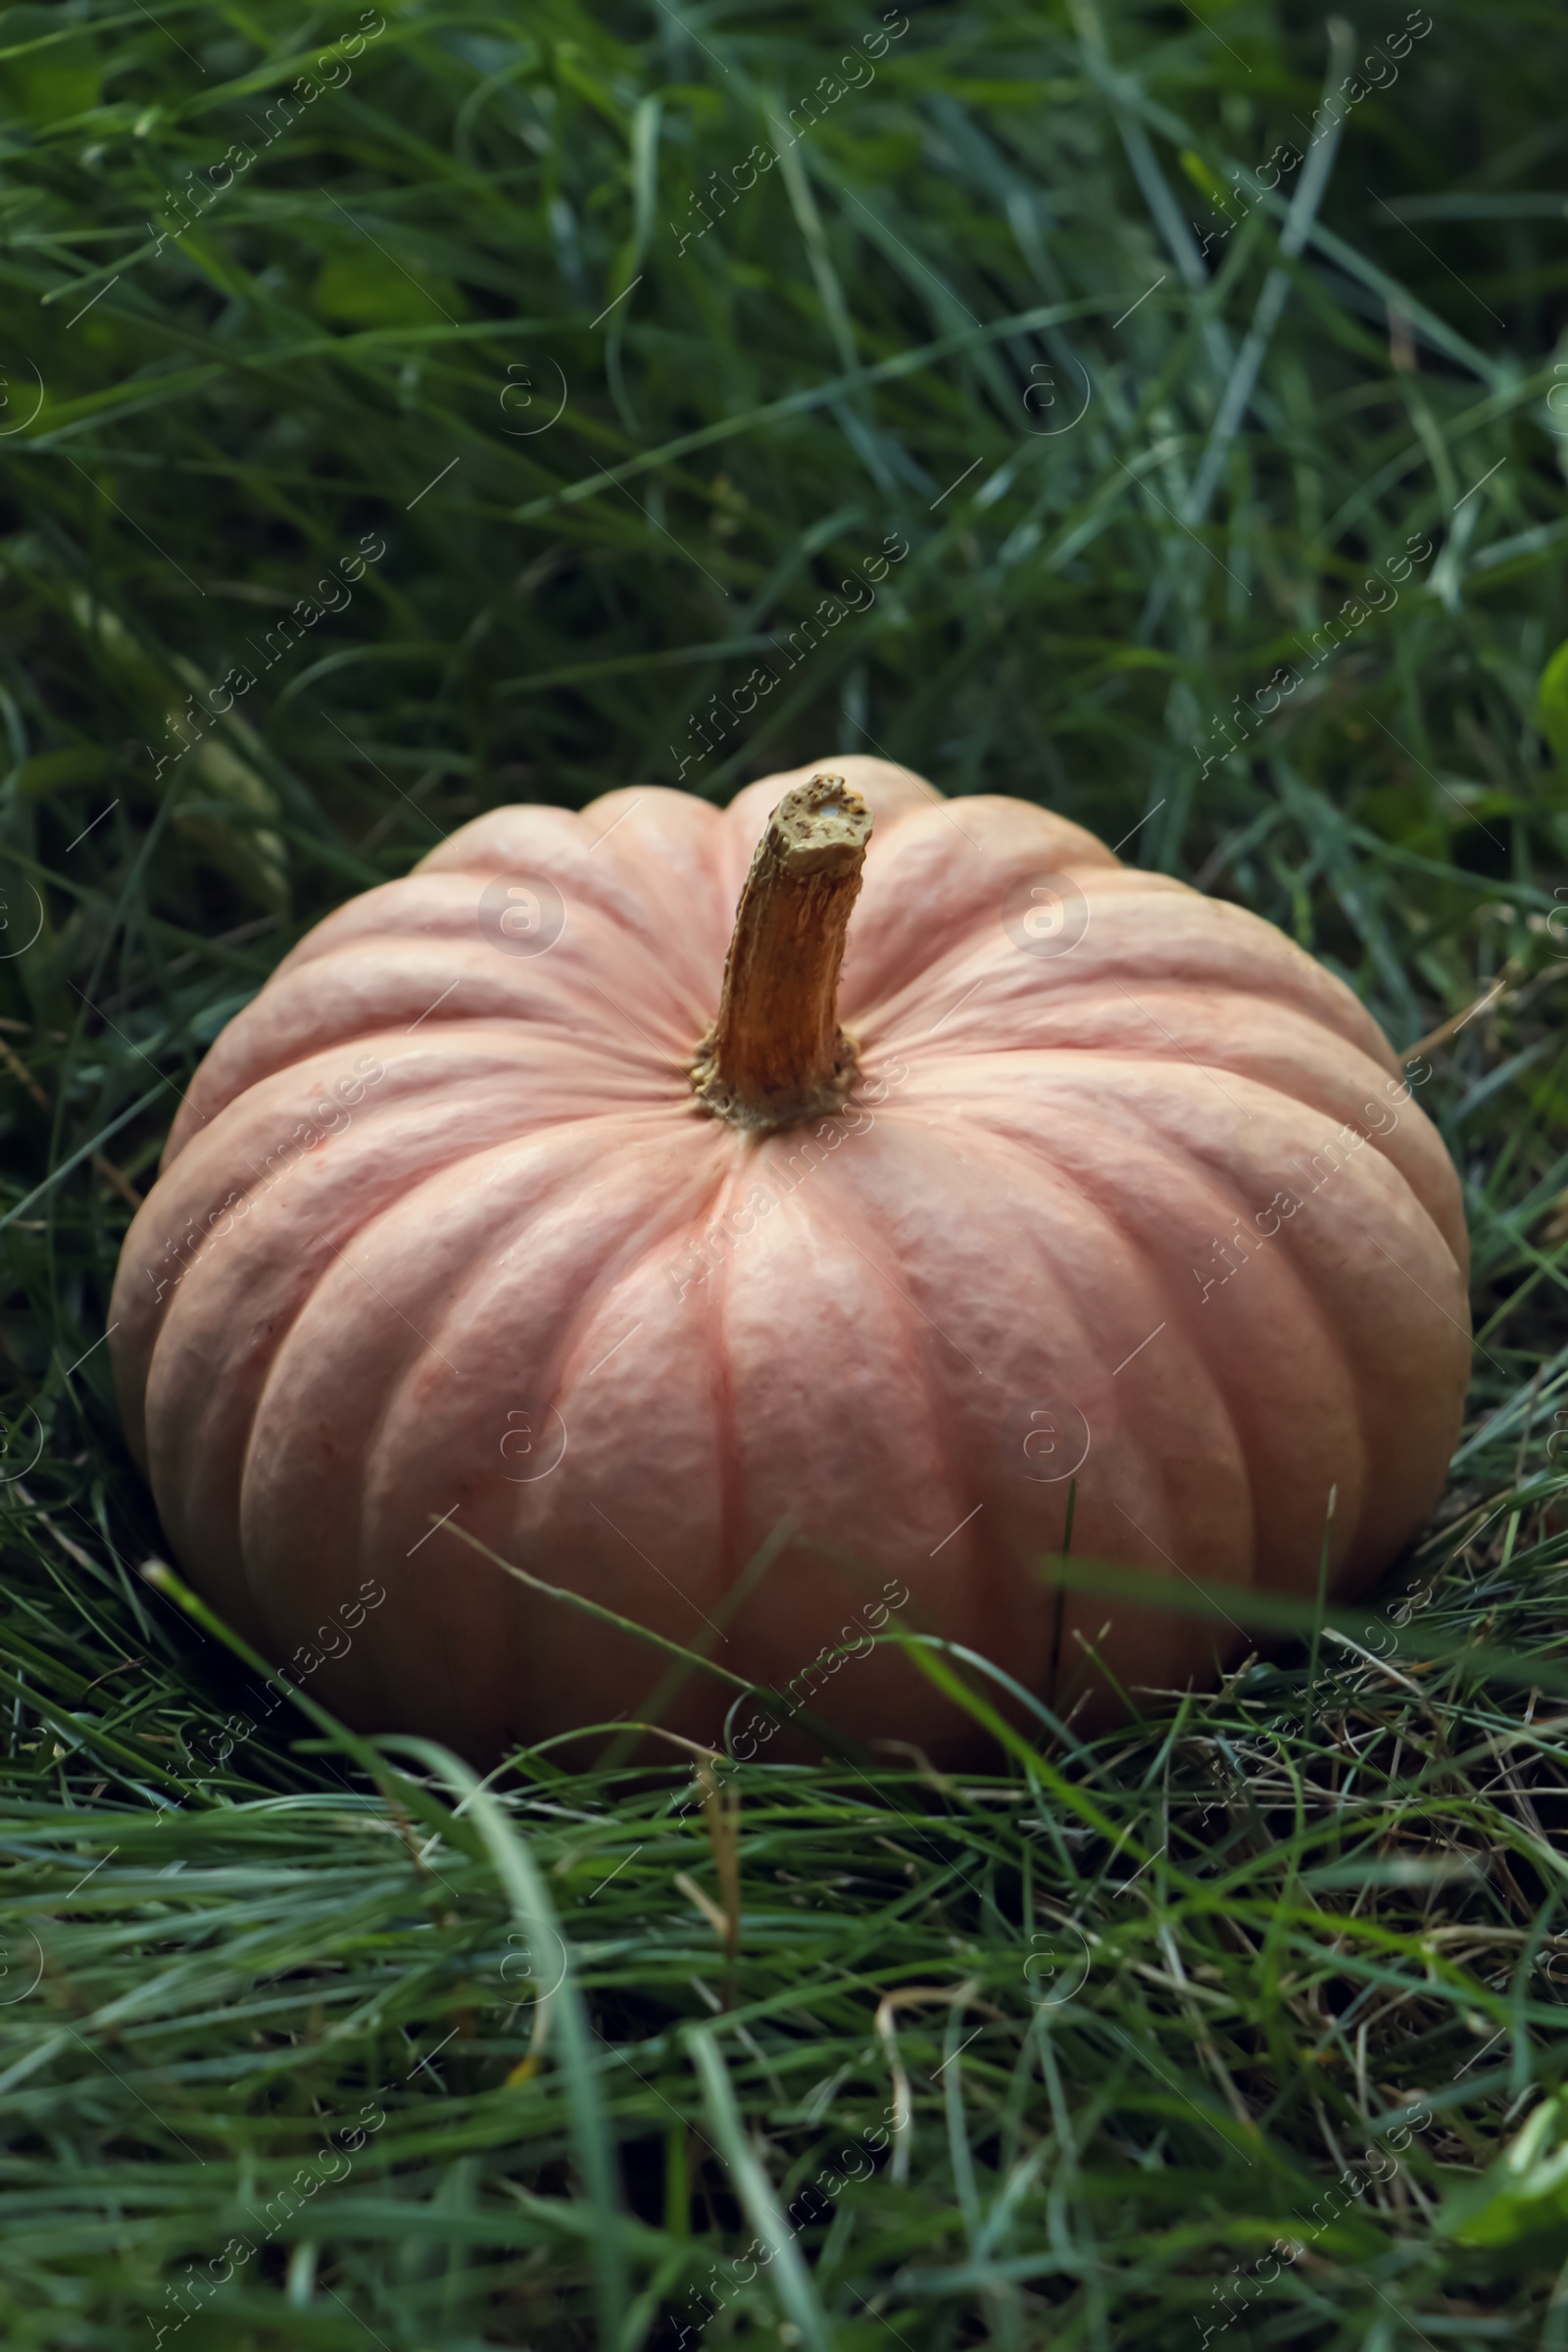 Photo of Whole ripe pumpkin among green grass outdoors